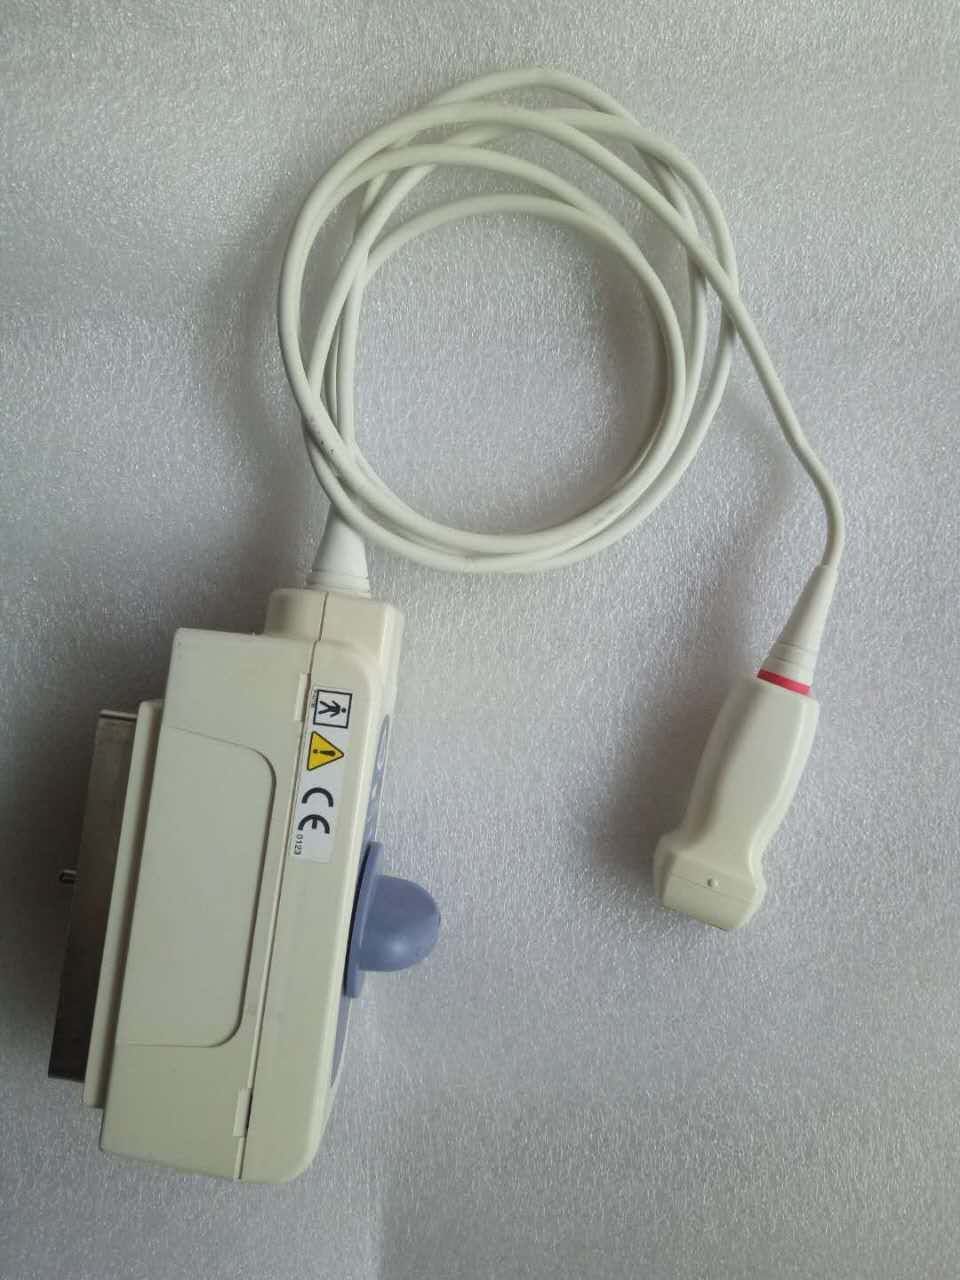 Aloka original used UST-52105 ultrasound probe excellent ultrasound transducer DIAGNOSTIC ULTRASOUND MACHINES FOR SALE